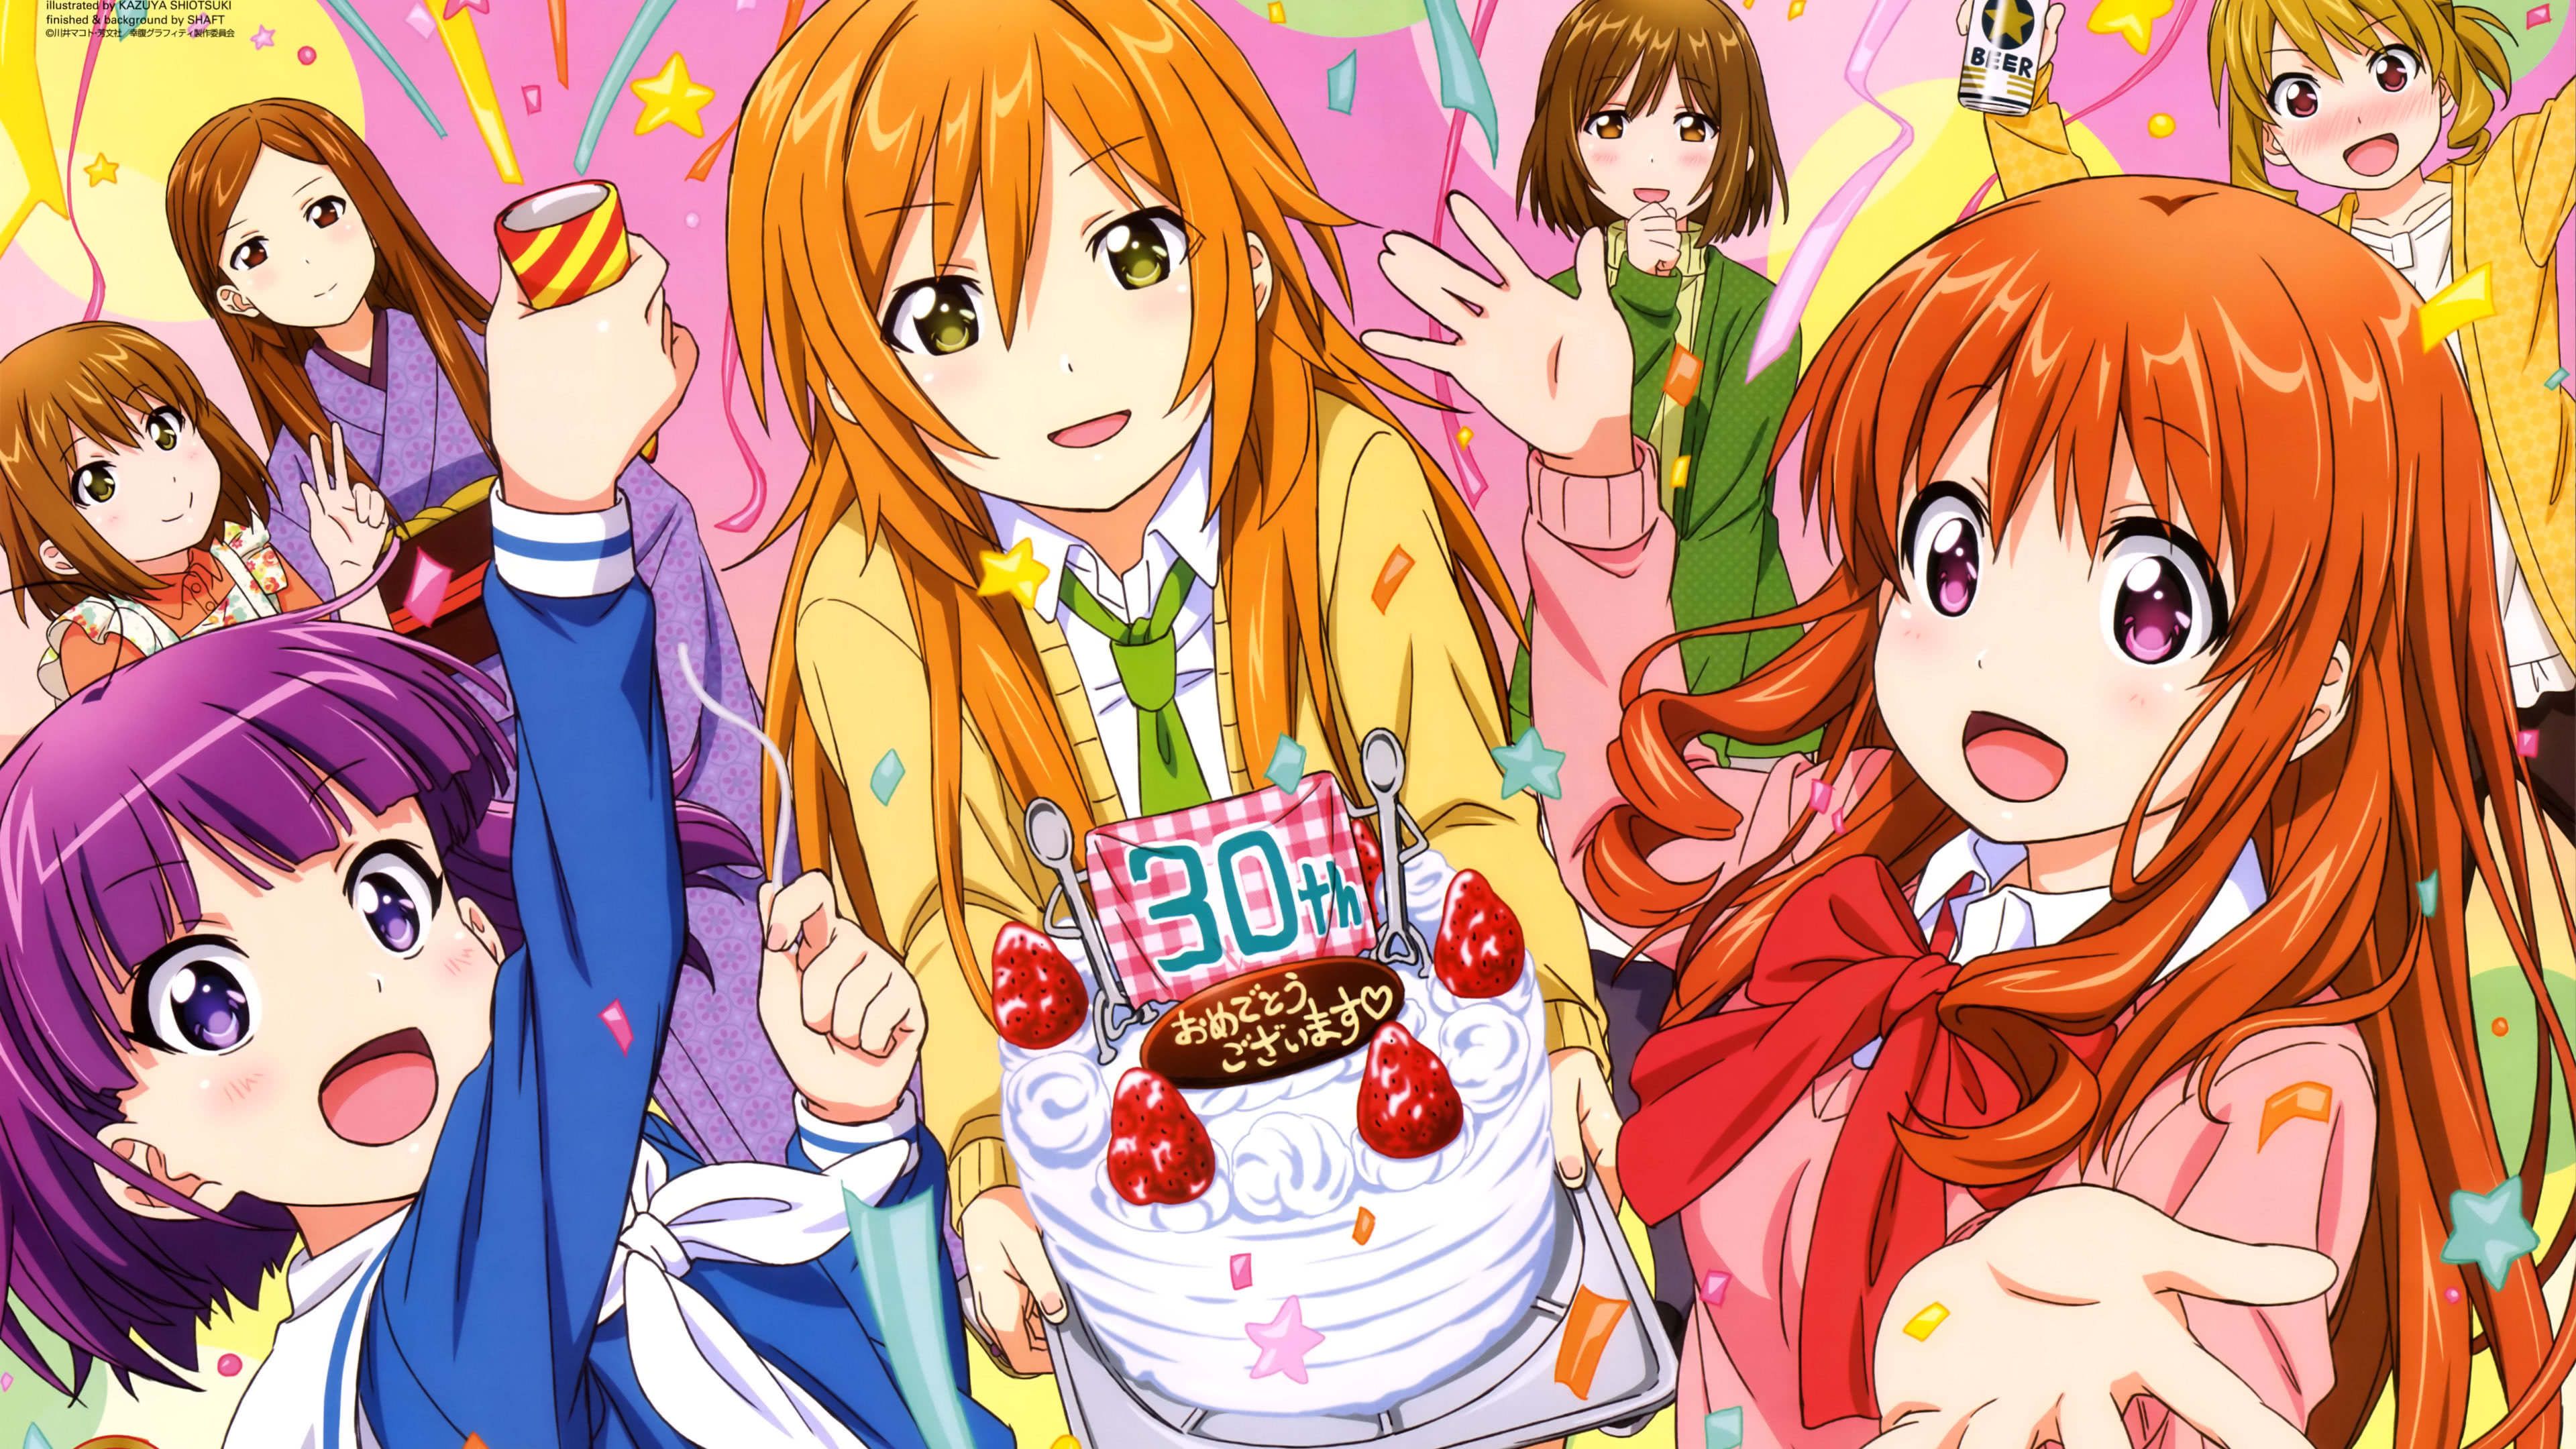 anime happy birthday wallpaper